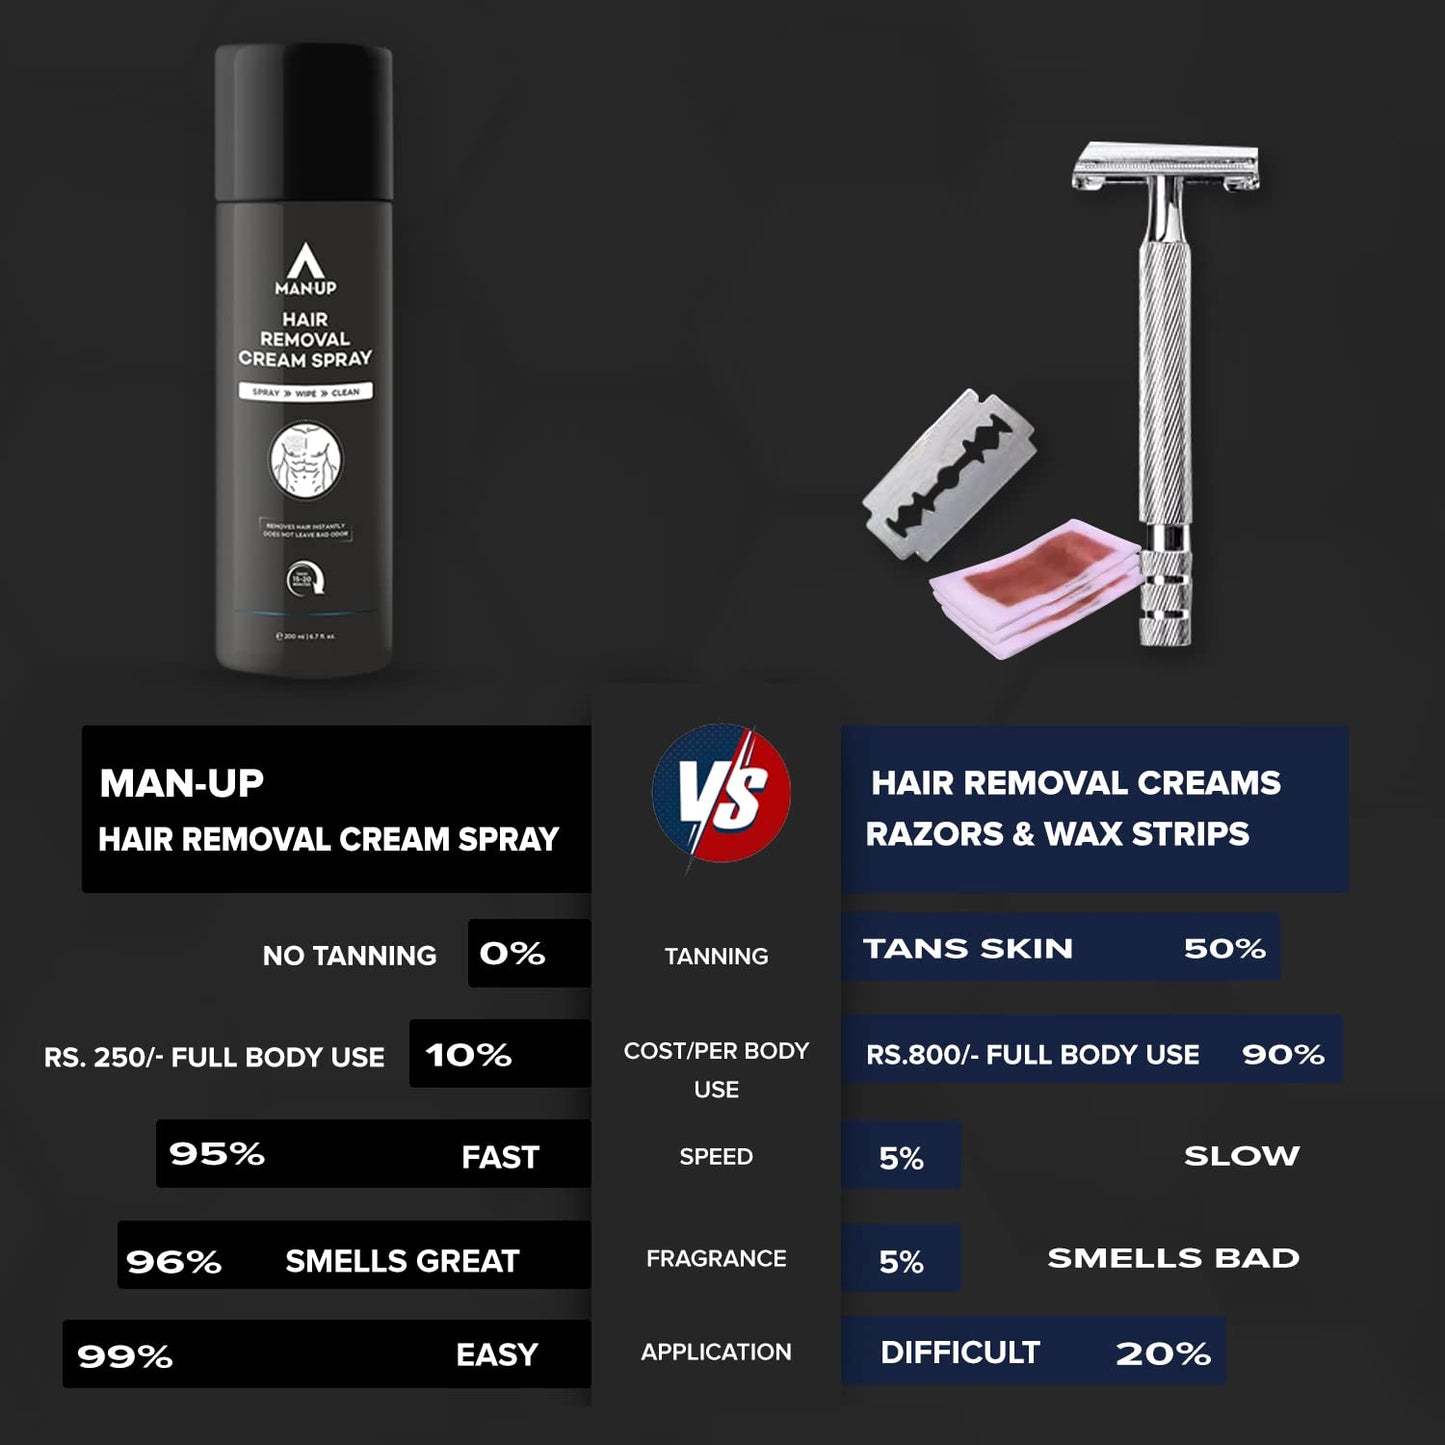 Man-Up Hair Volumizing Powder Wax For Men  10gm  Hair Removal Cream Spray  200ml Combo Mens Kit